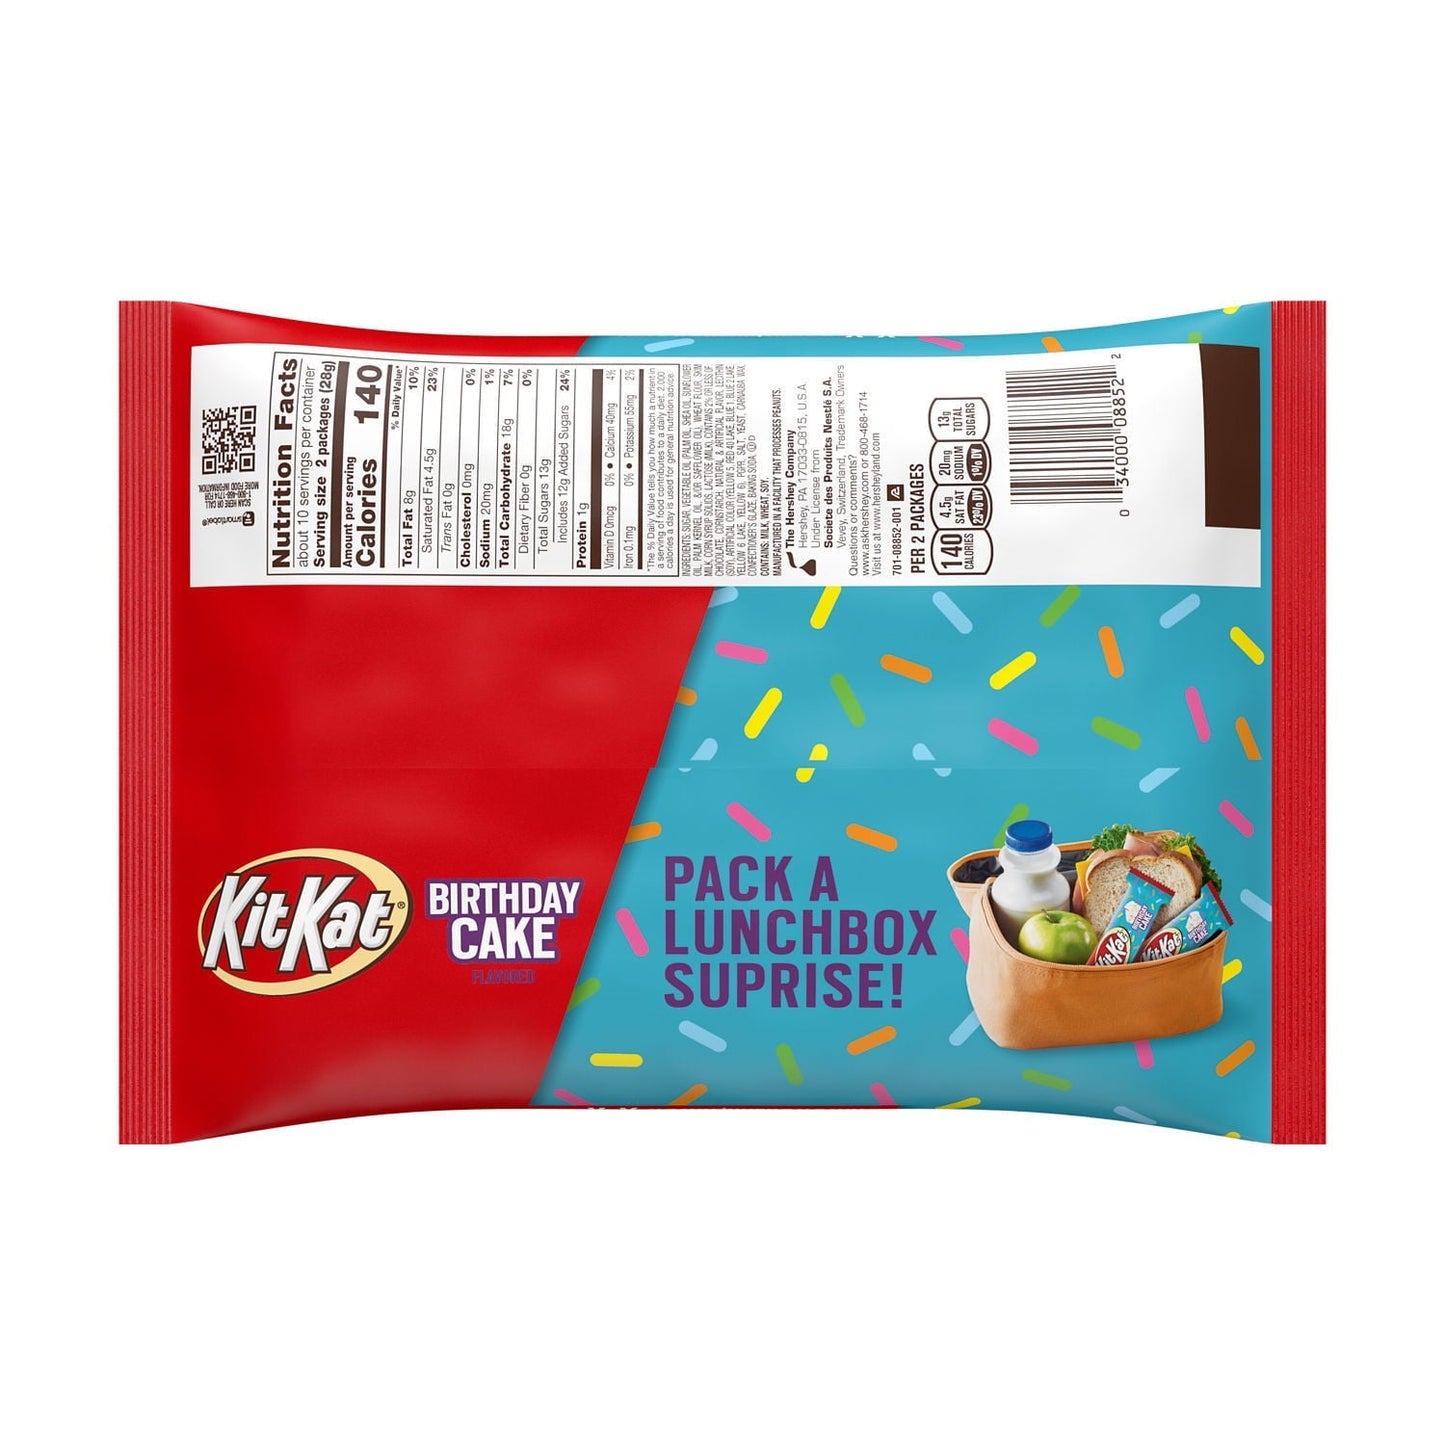 Kit Kat® Birthday Cake Flavored Wafer Snack Size Candy, Bag 10.29 oz